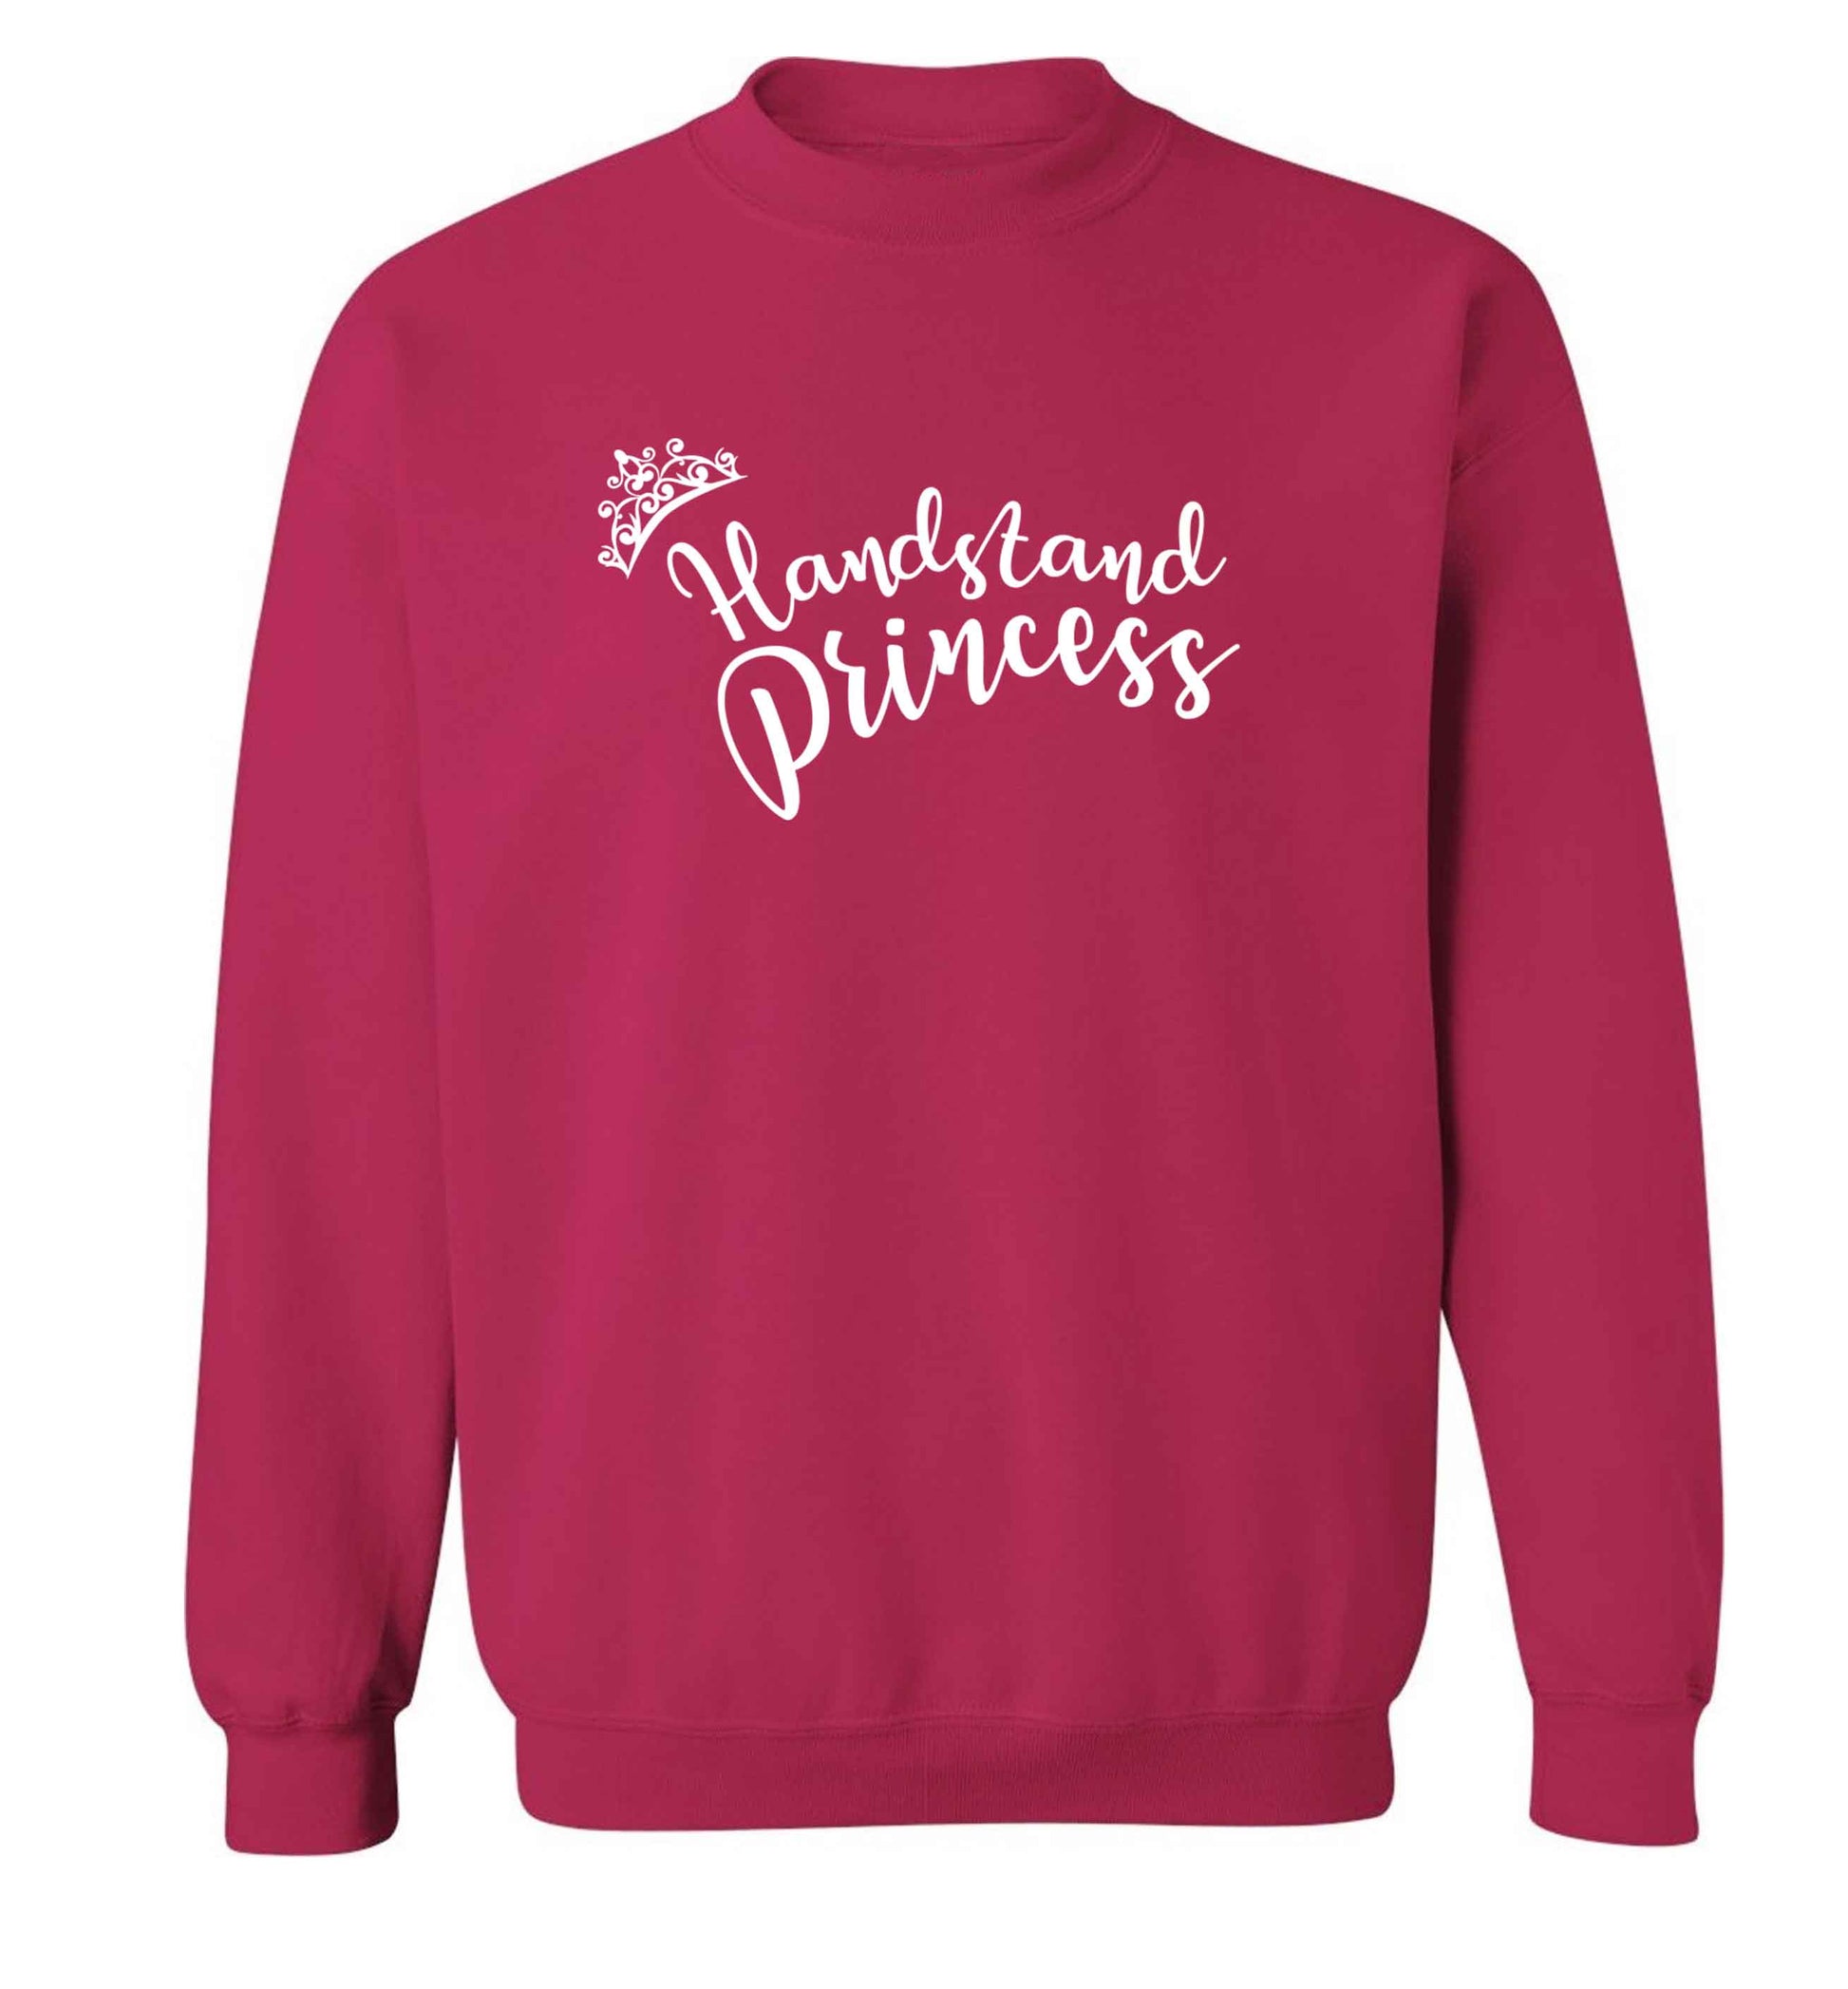 Handstand princess Adult's unisex pink Sweater 2XL